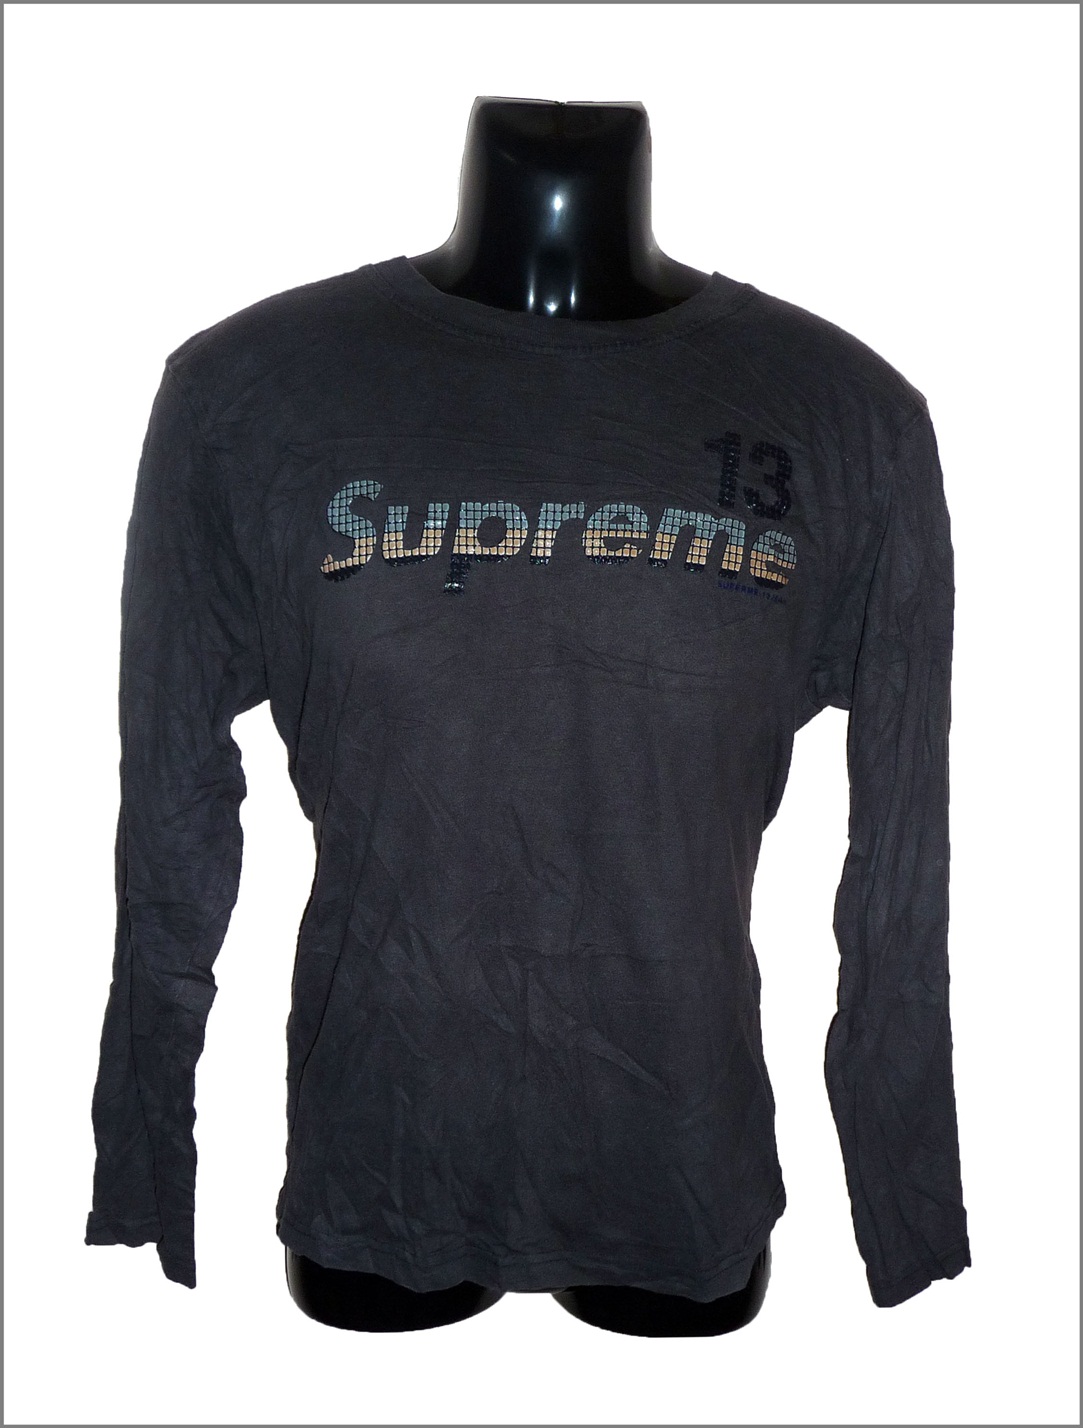 Dallek Shop - Bundle Online Shoping: T-Shirt Long Sleeve Supreme 13